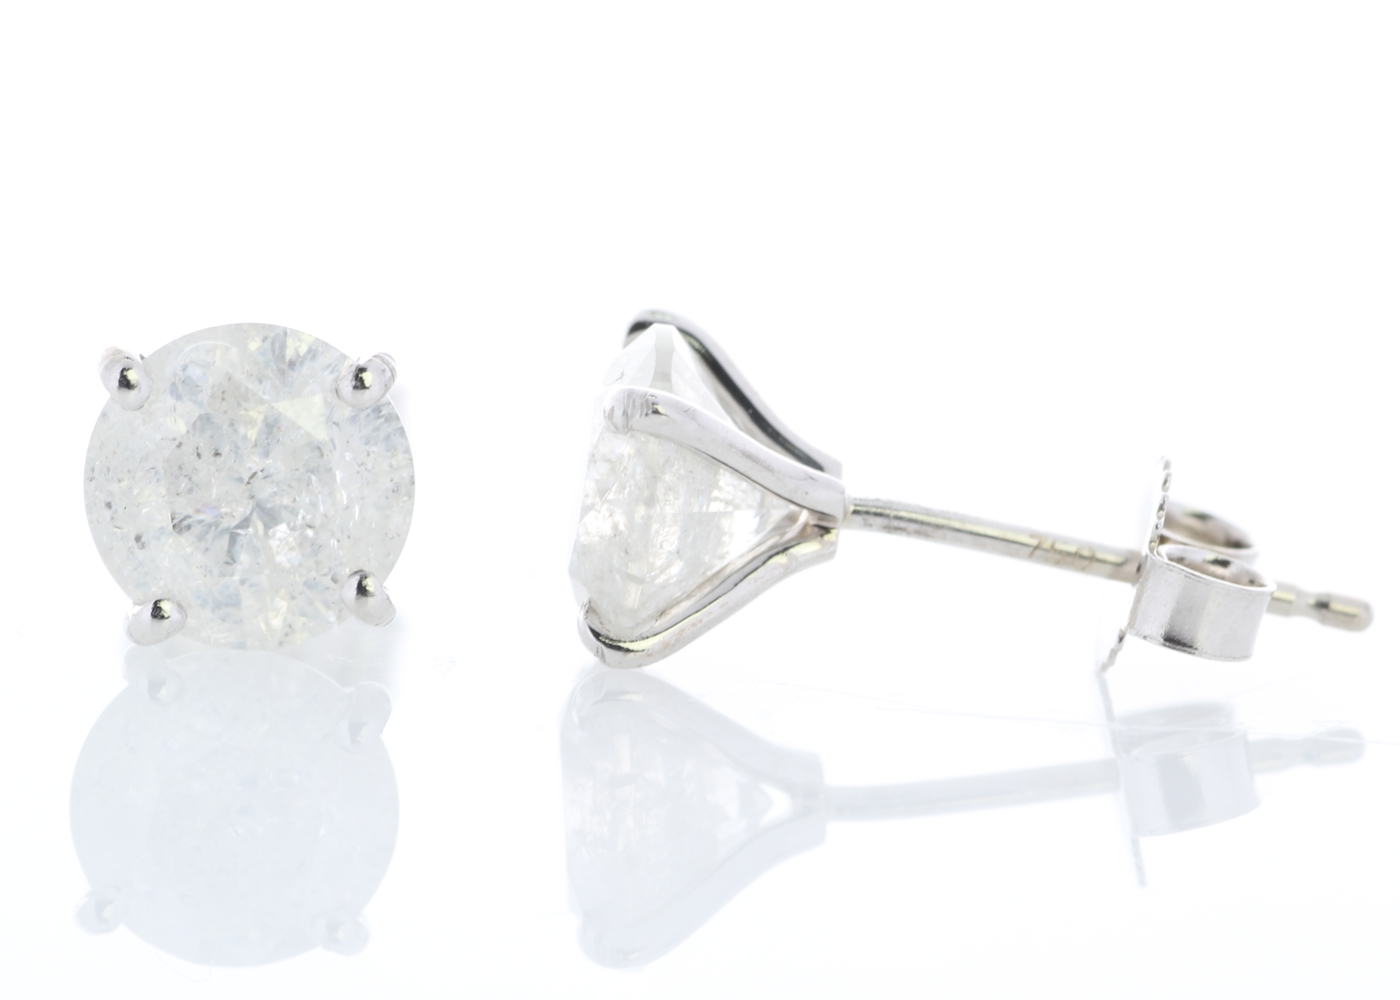 18ct White Gold Prong Set Diamond Earrings 2.56 Carats - Image 2 of 3